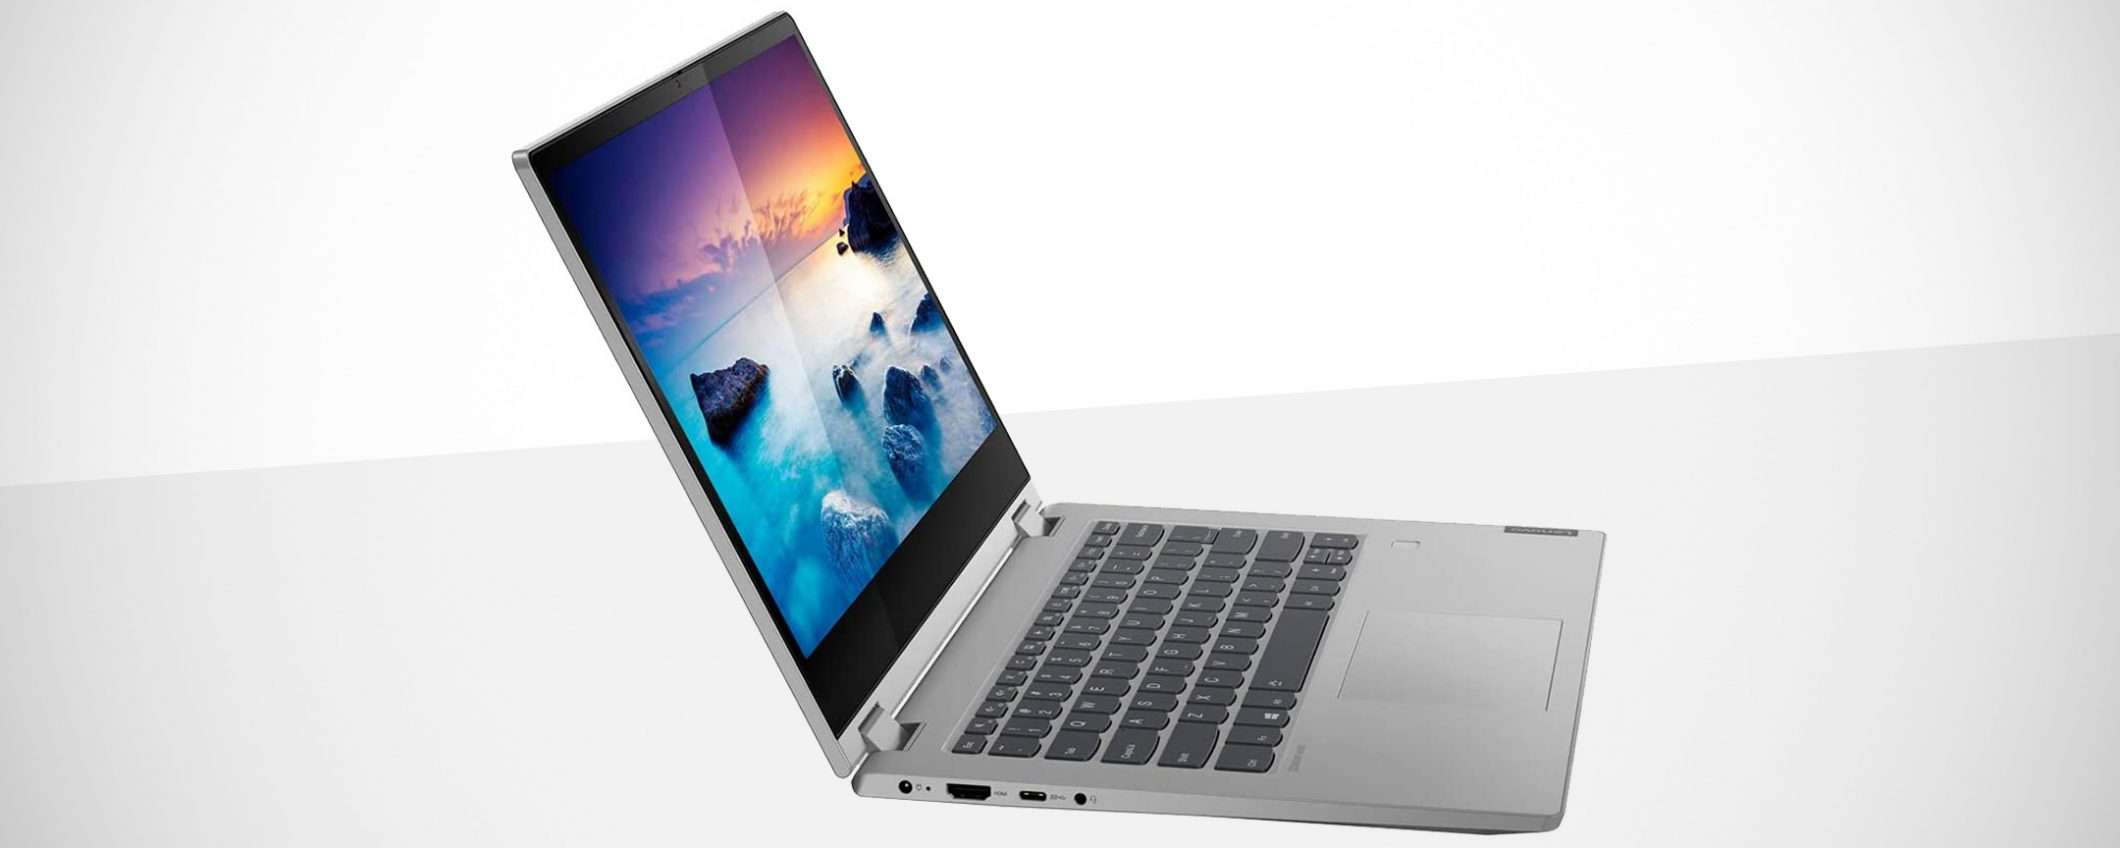 Lenovo Chromebook C340-11 in offerta su Amazon